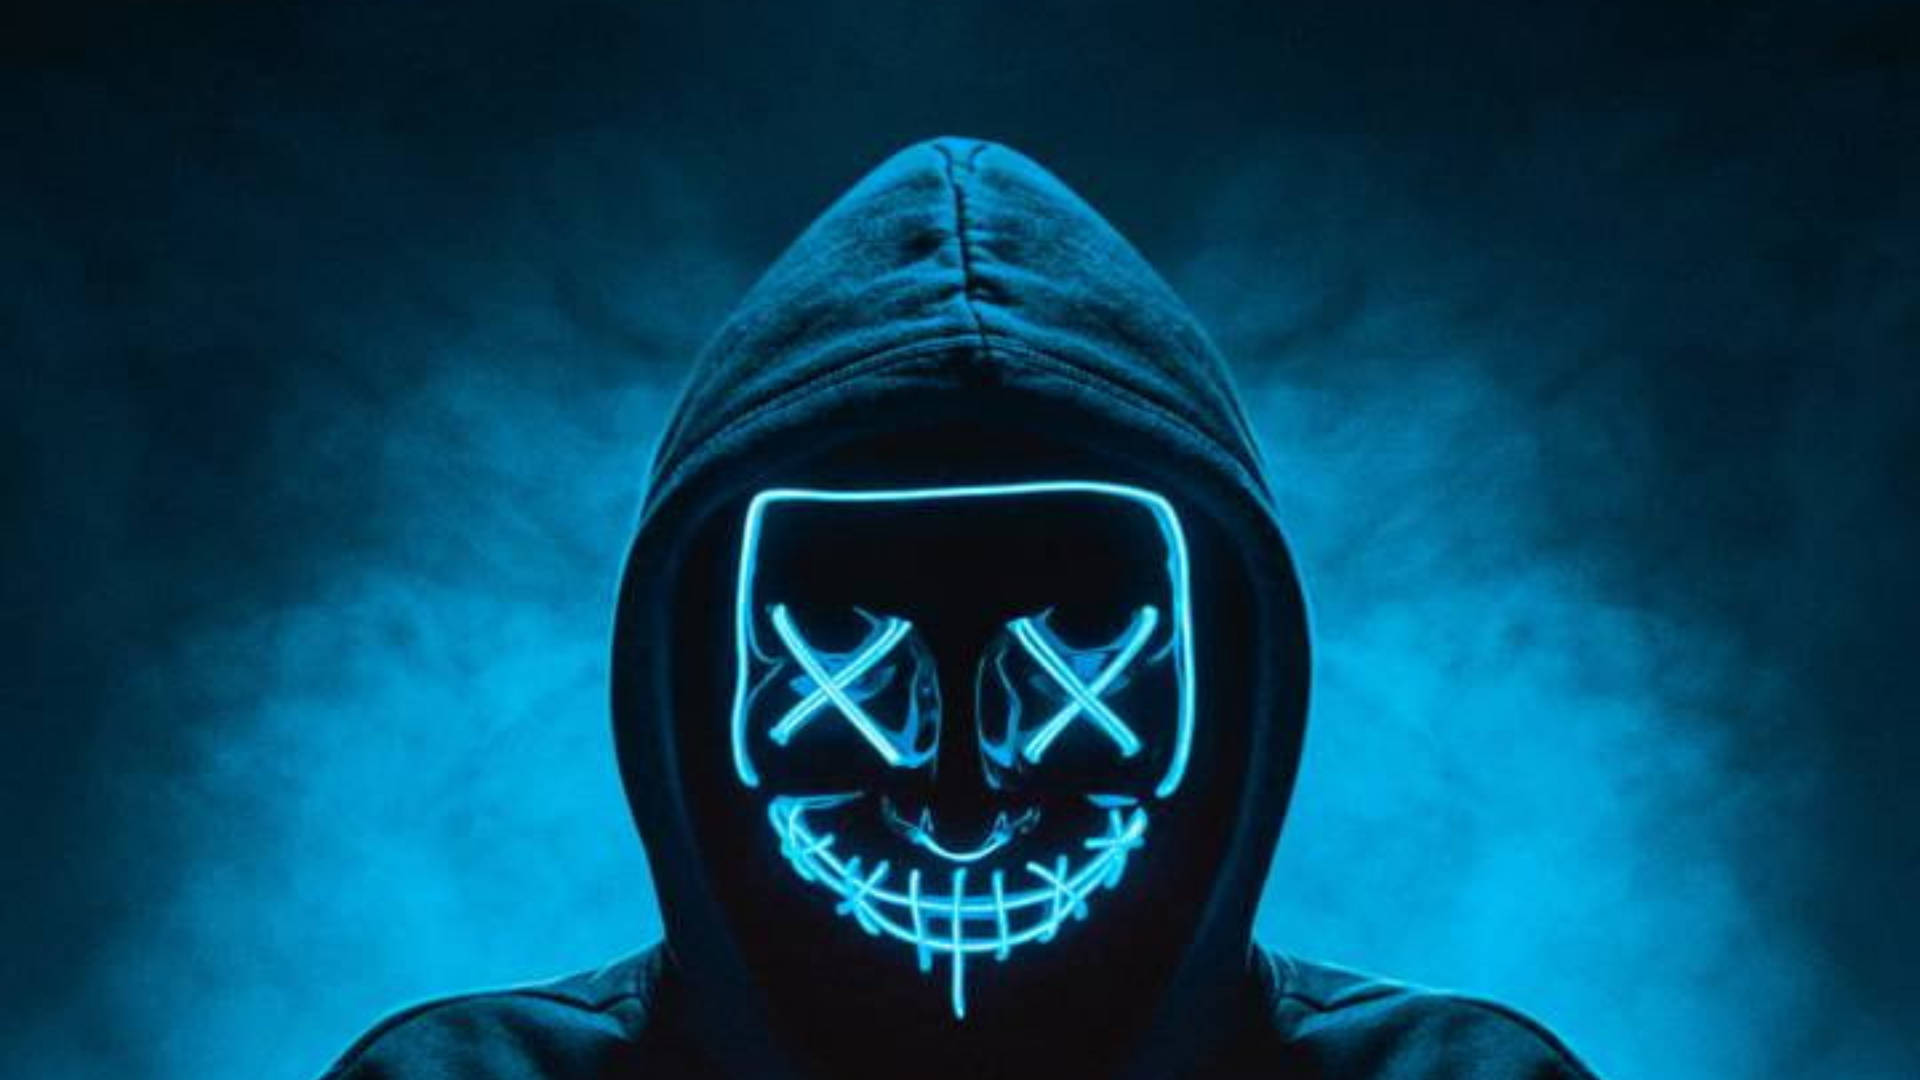 Neon Mask And Hoodie Hacker 4k